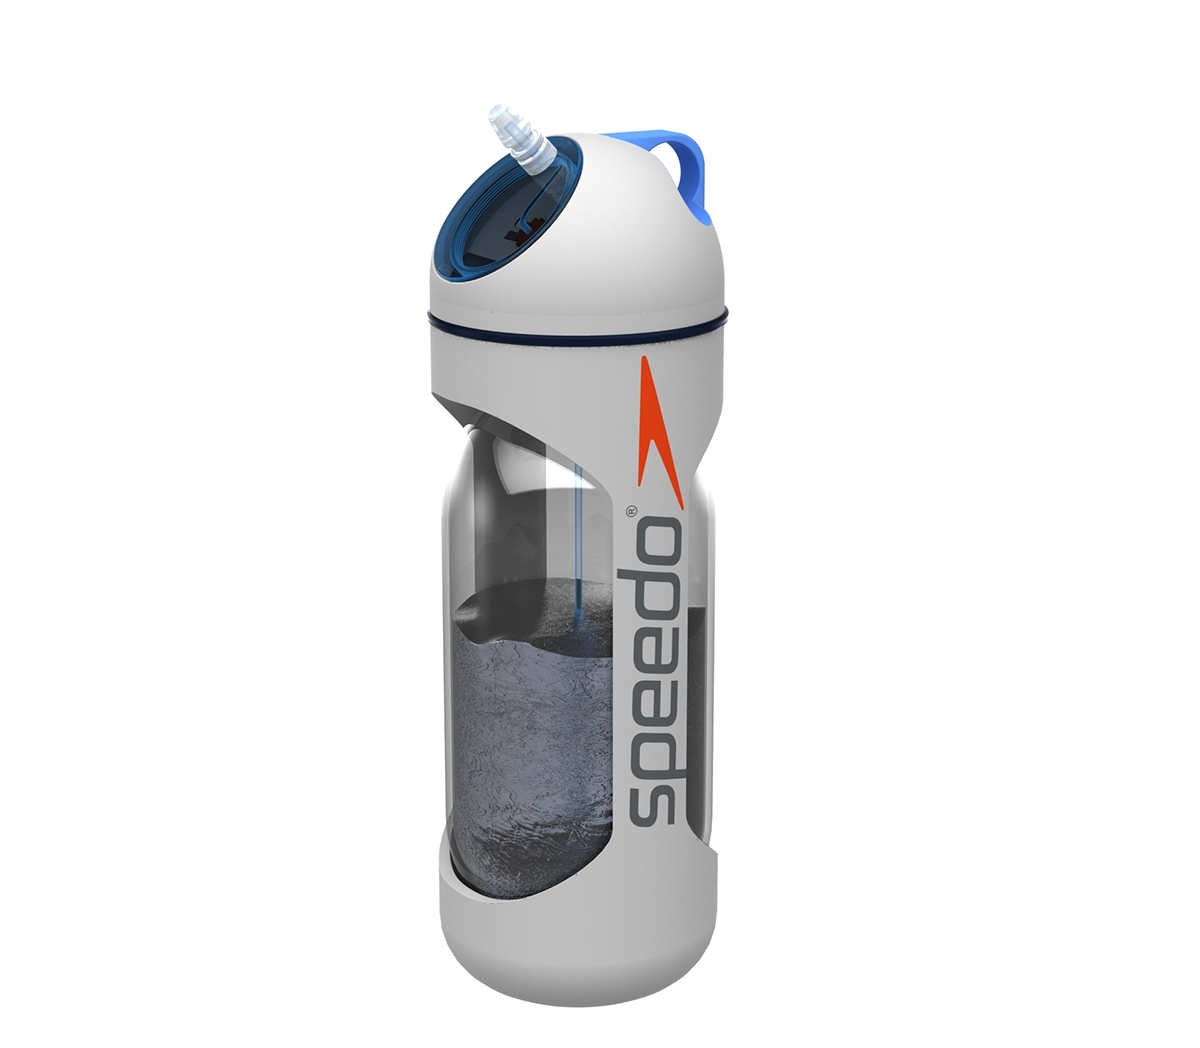 Speedo competition project drinks bottle water sports Triathlon Water Sports